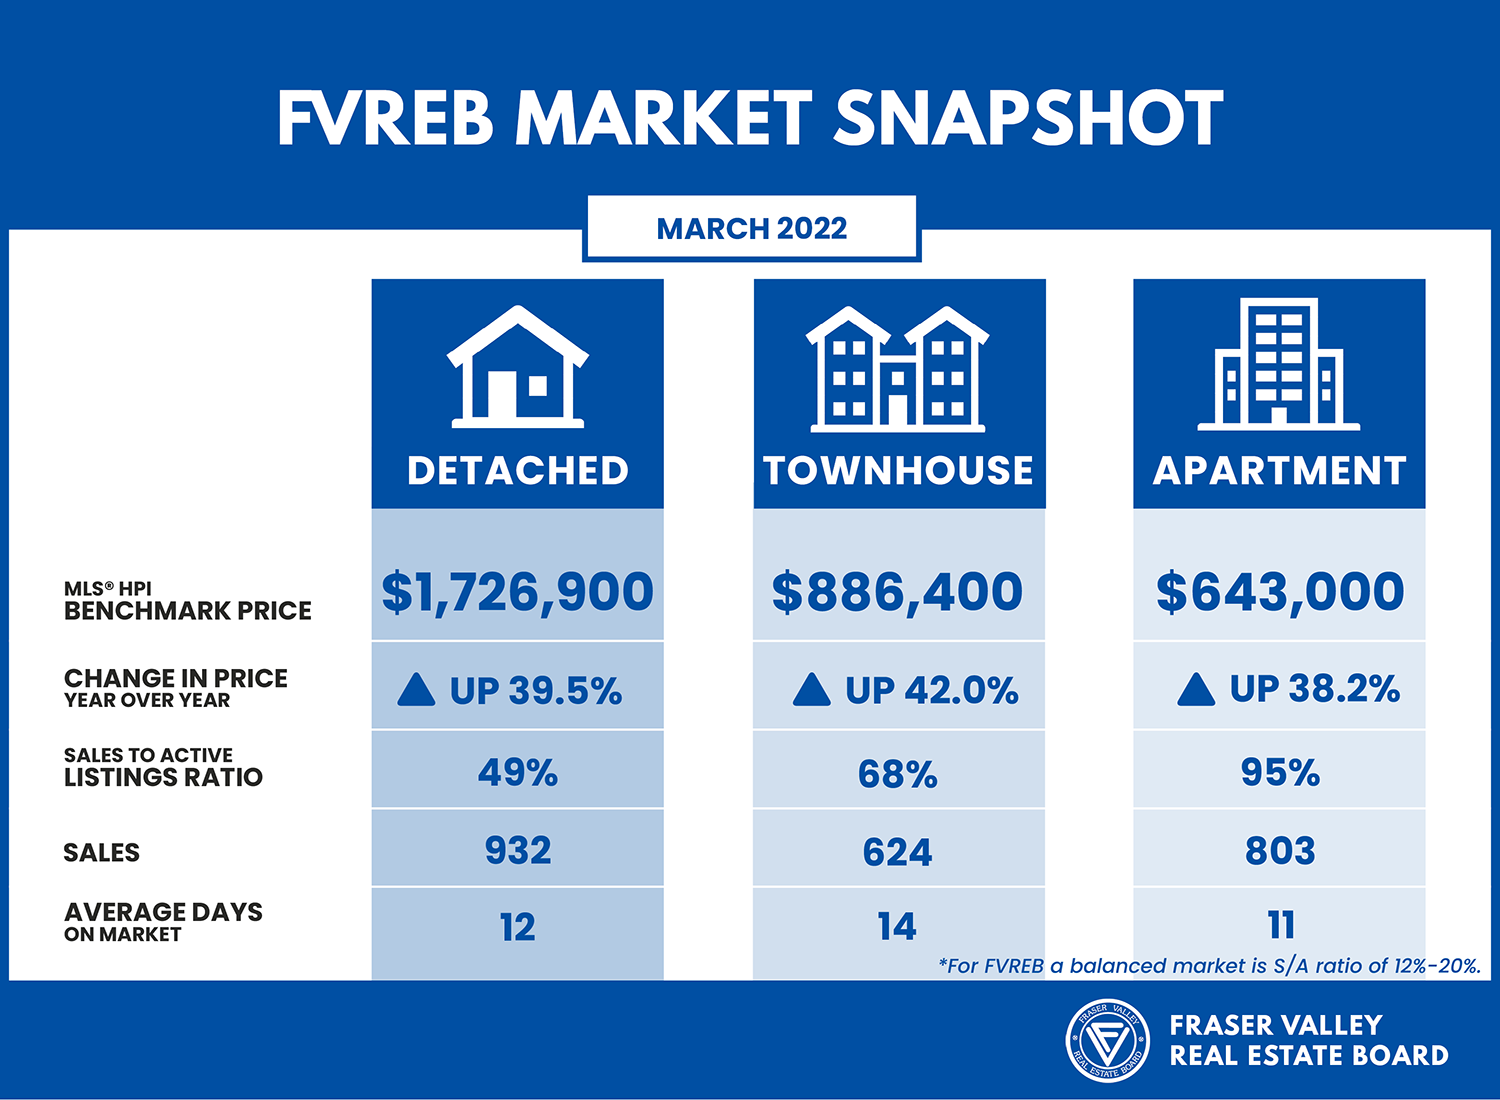 FVREB Market Snapshot March 2022